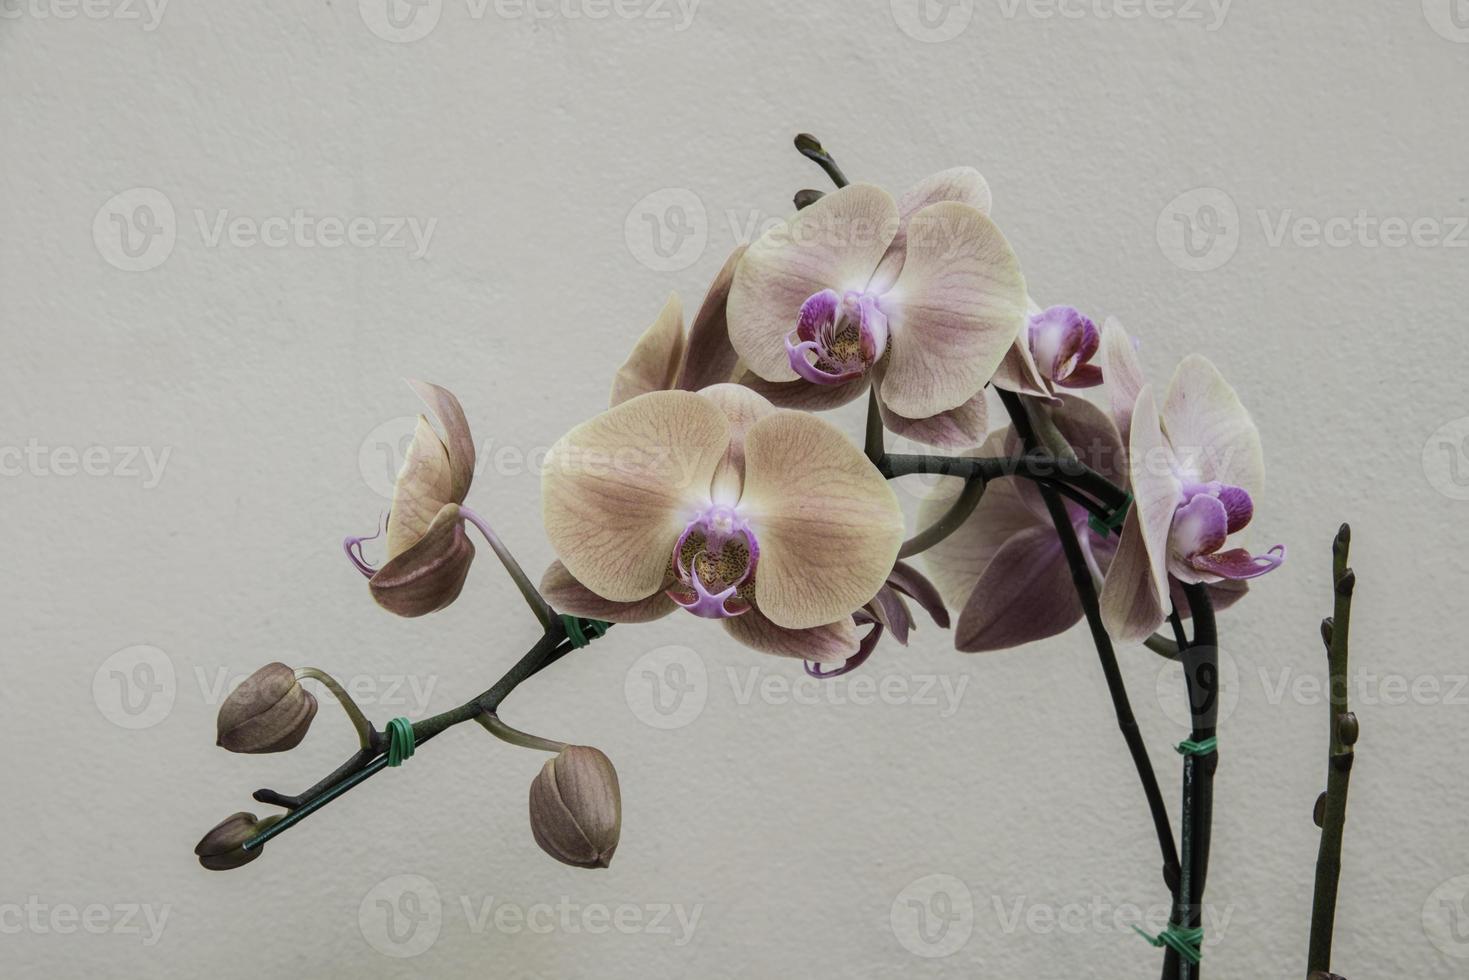 rosa randig orkidéblomma, isolerad foto